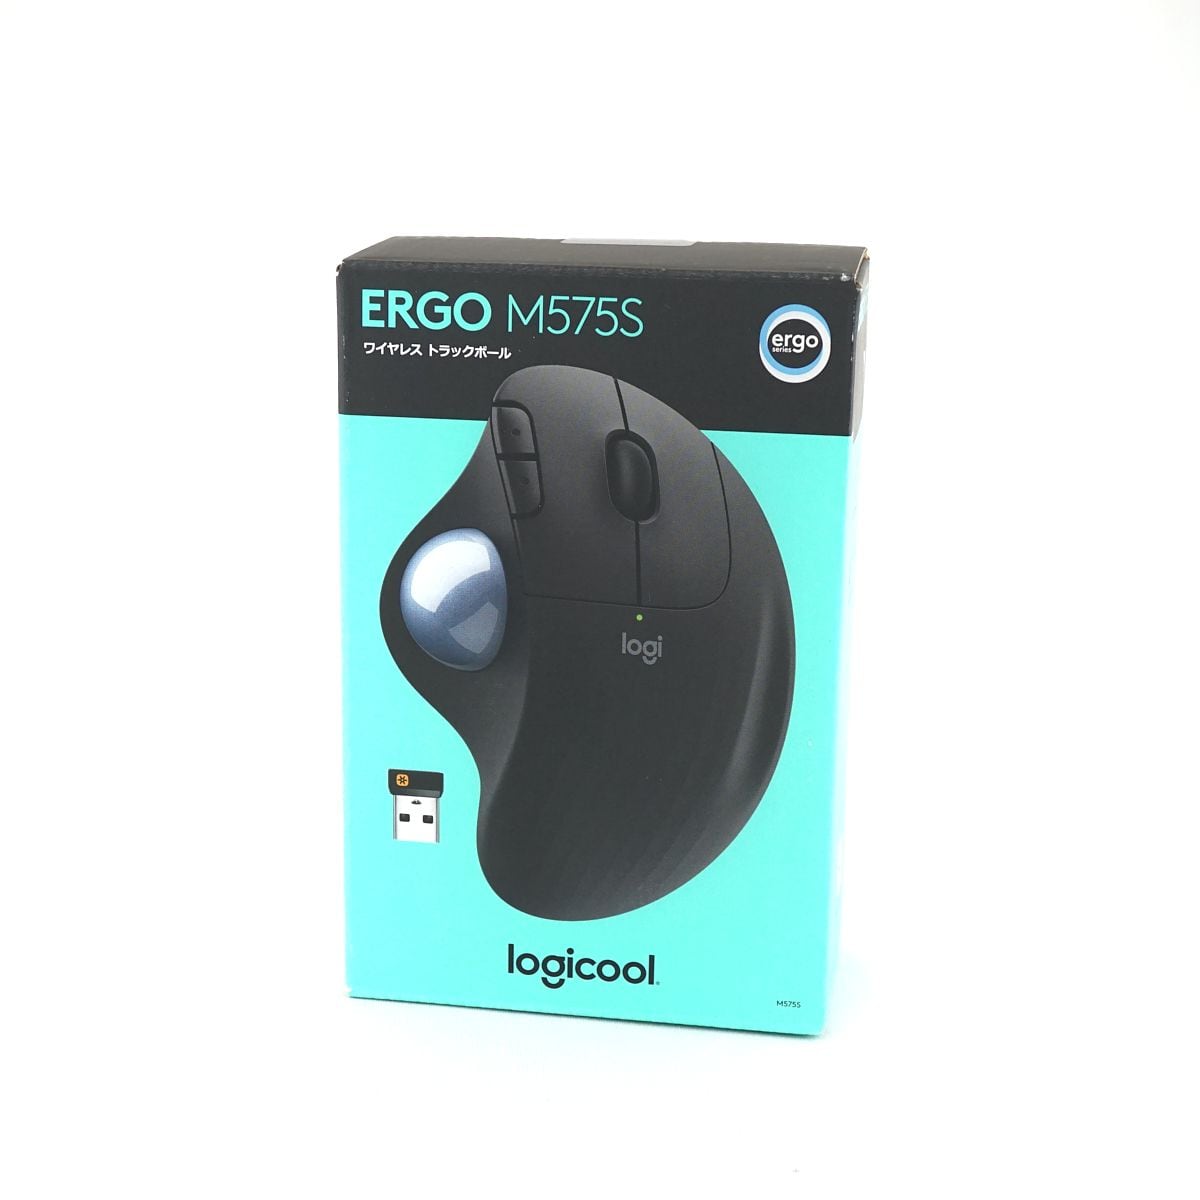 ERGO M575S　ロジクール　ワイヤレストラックボールマウス